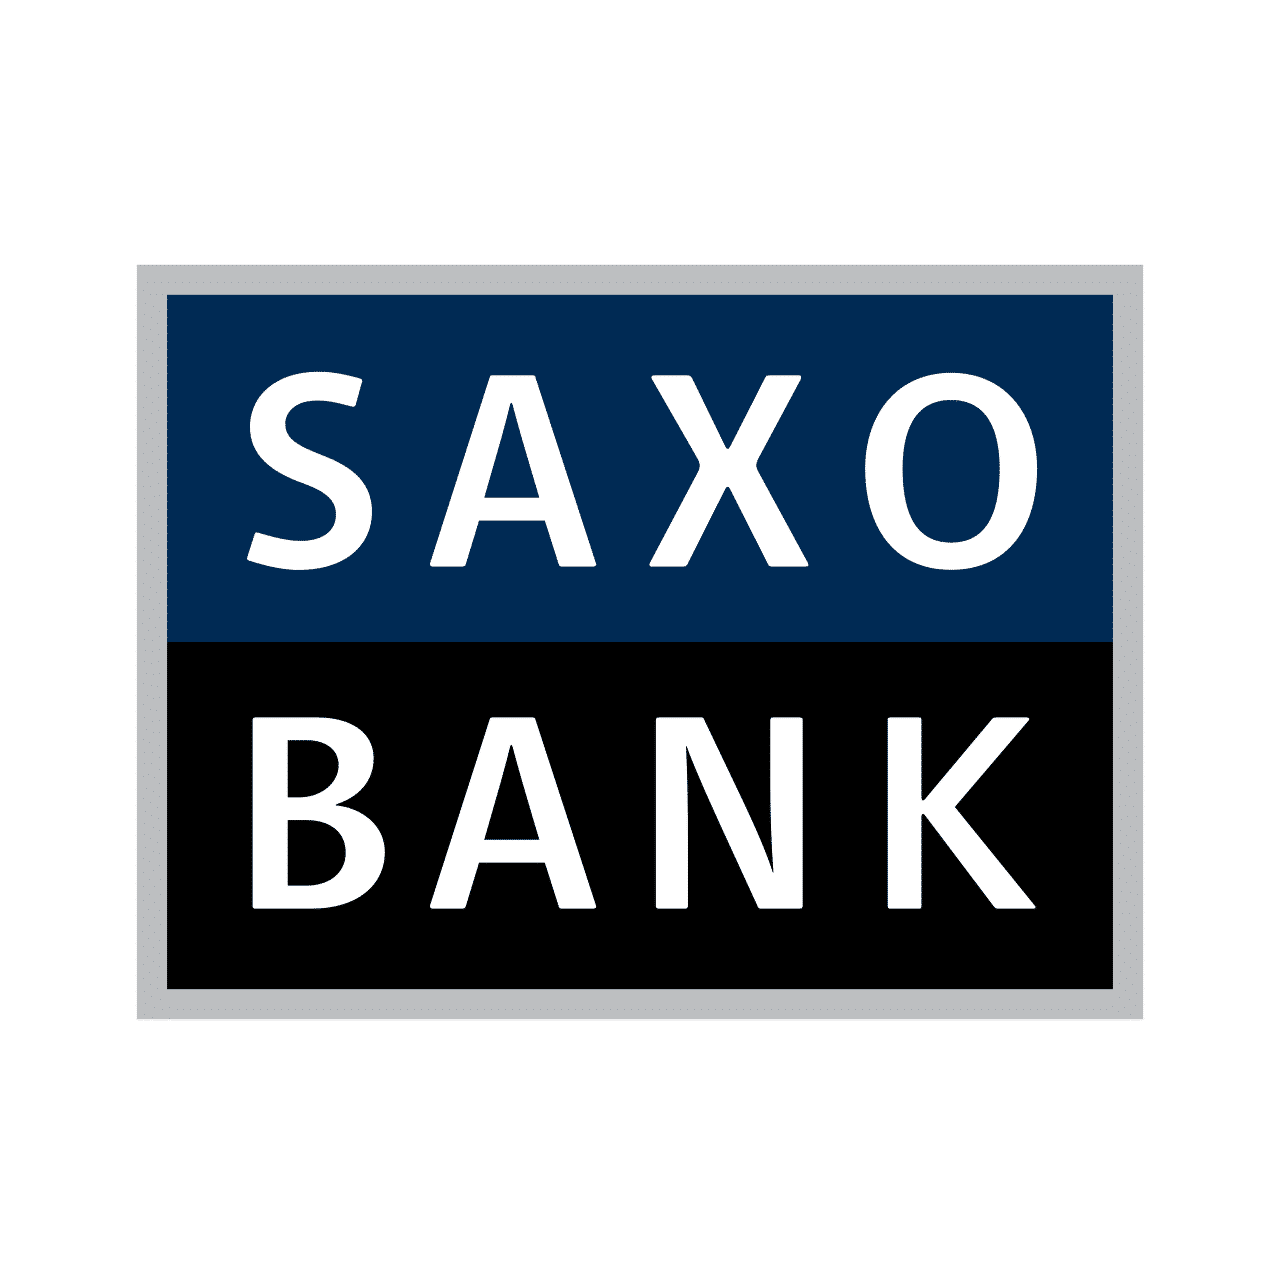 saxo bank stock options